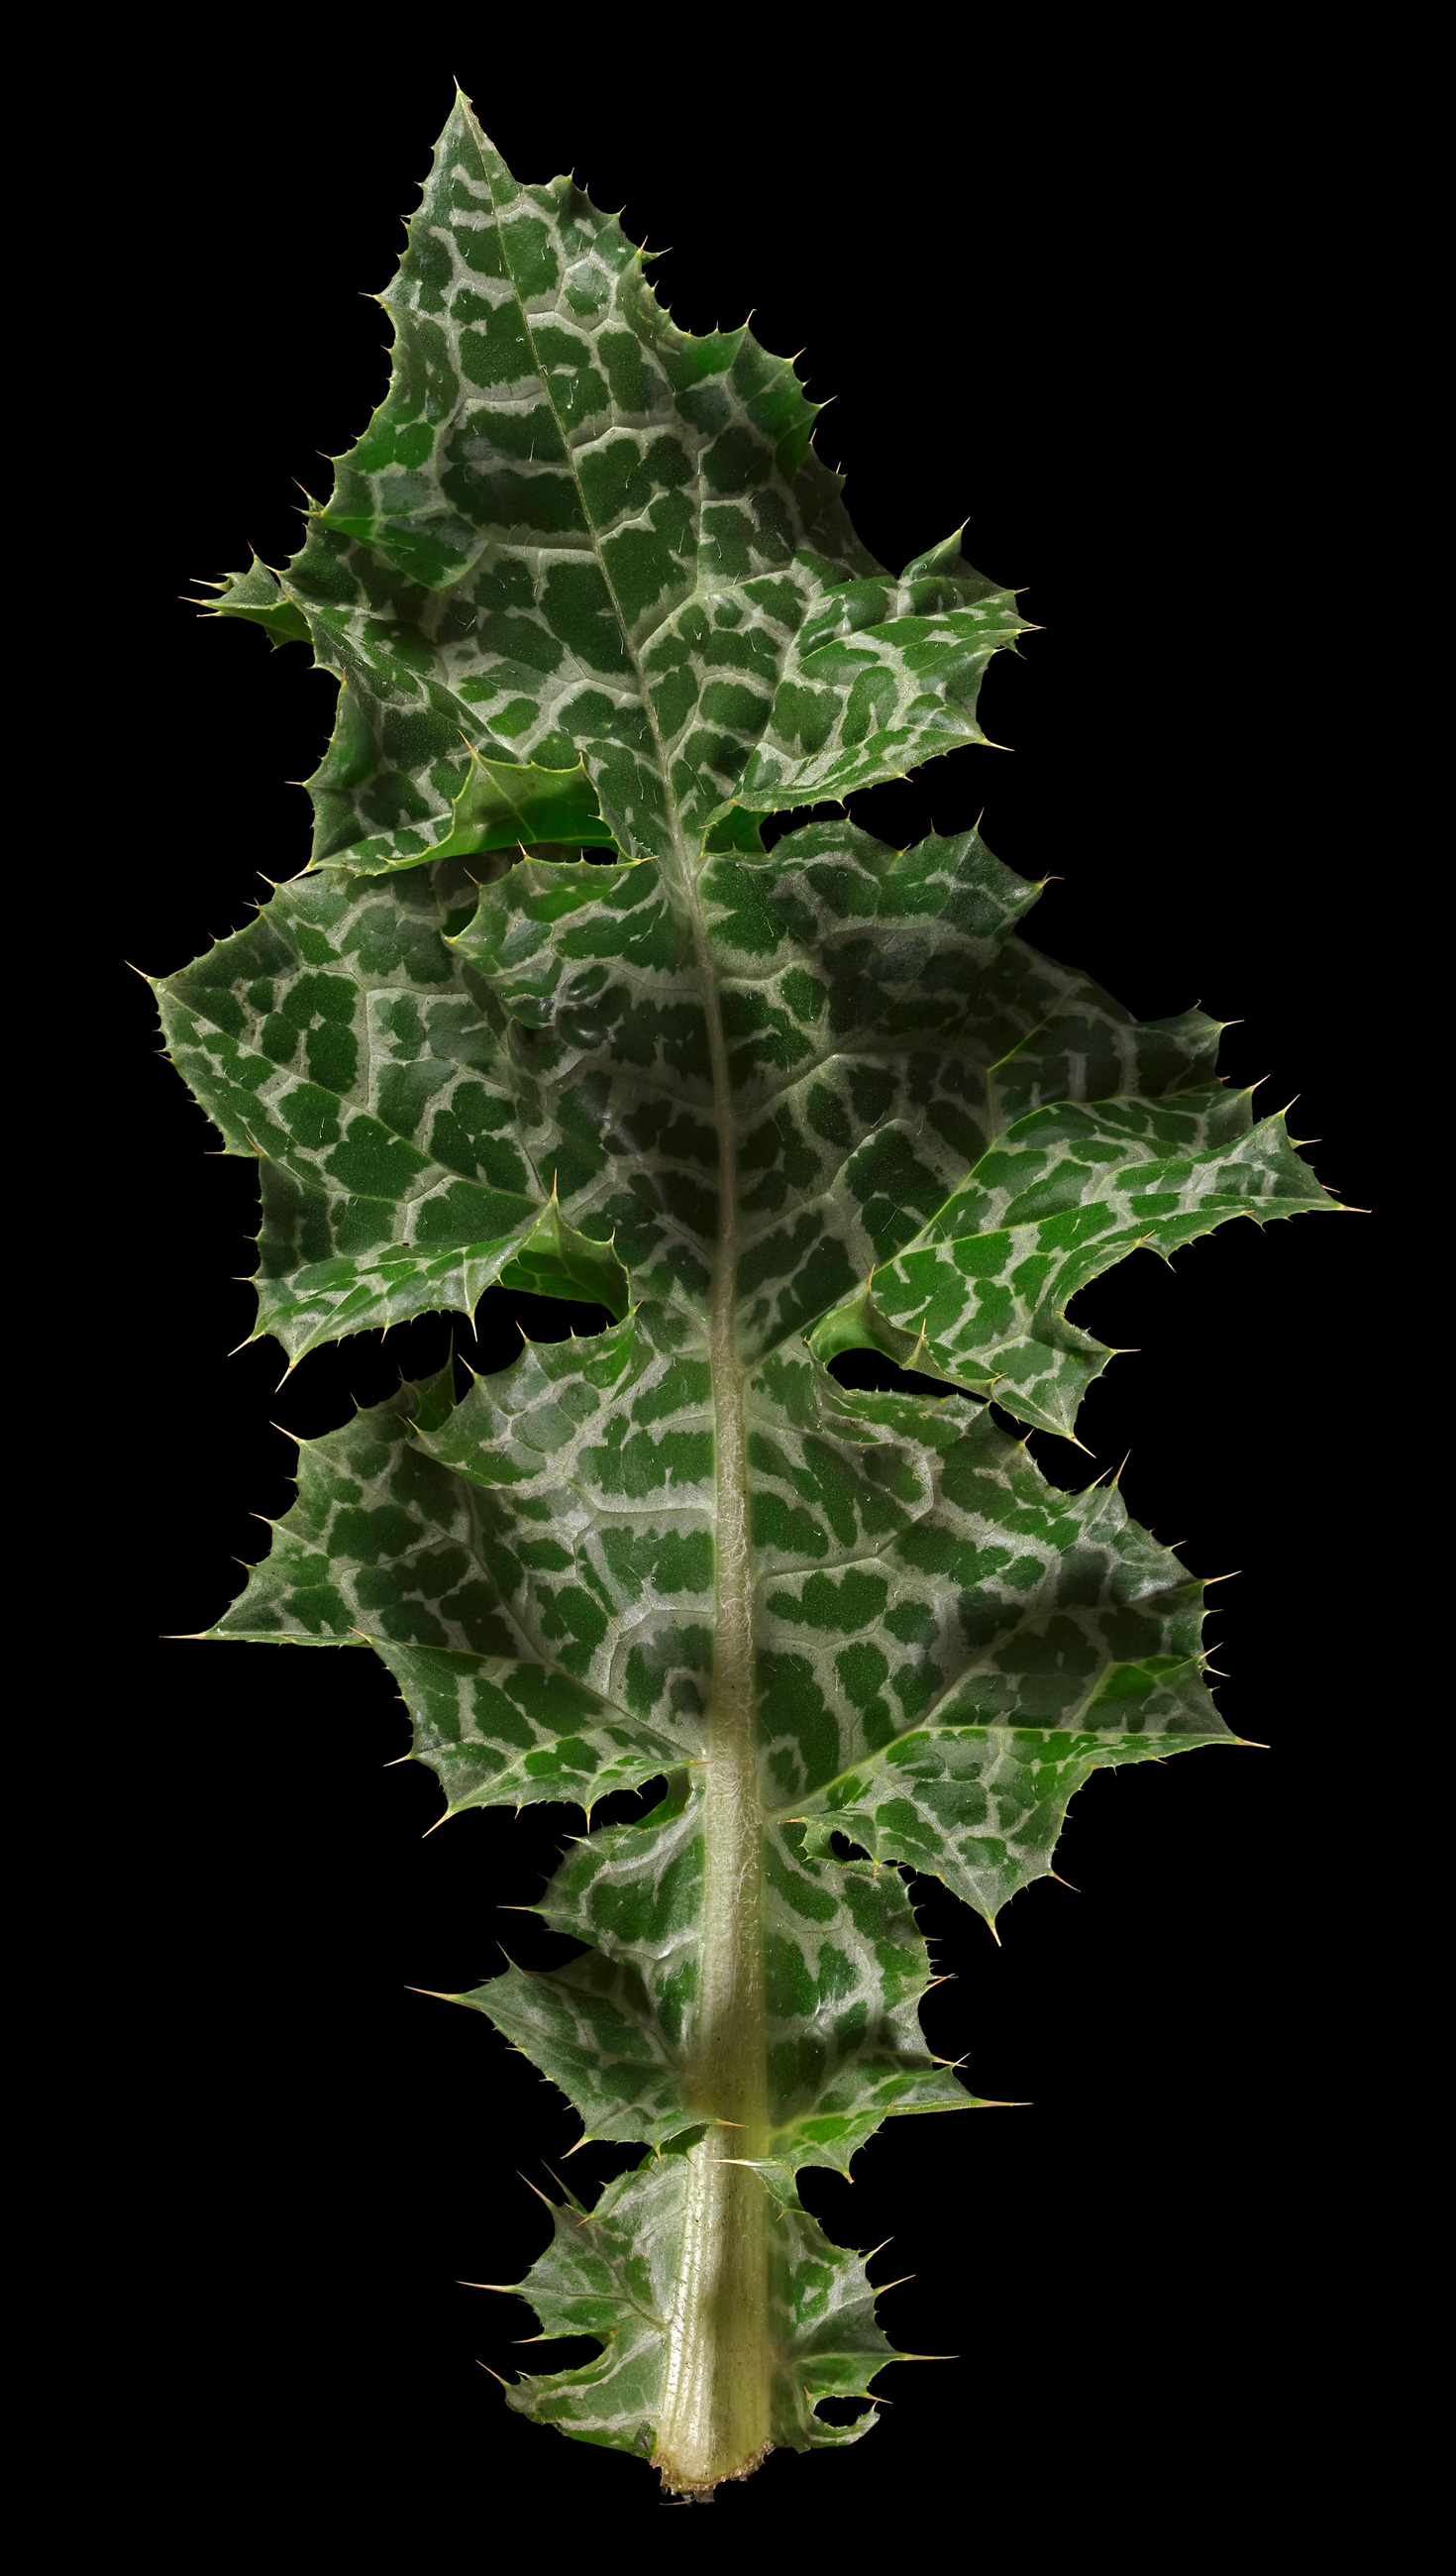 Milk thistle: Silybum marianum (Leaf)